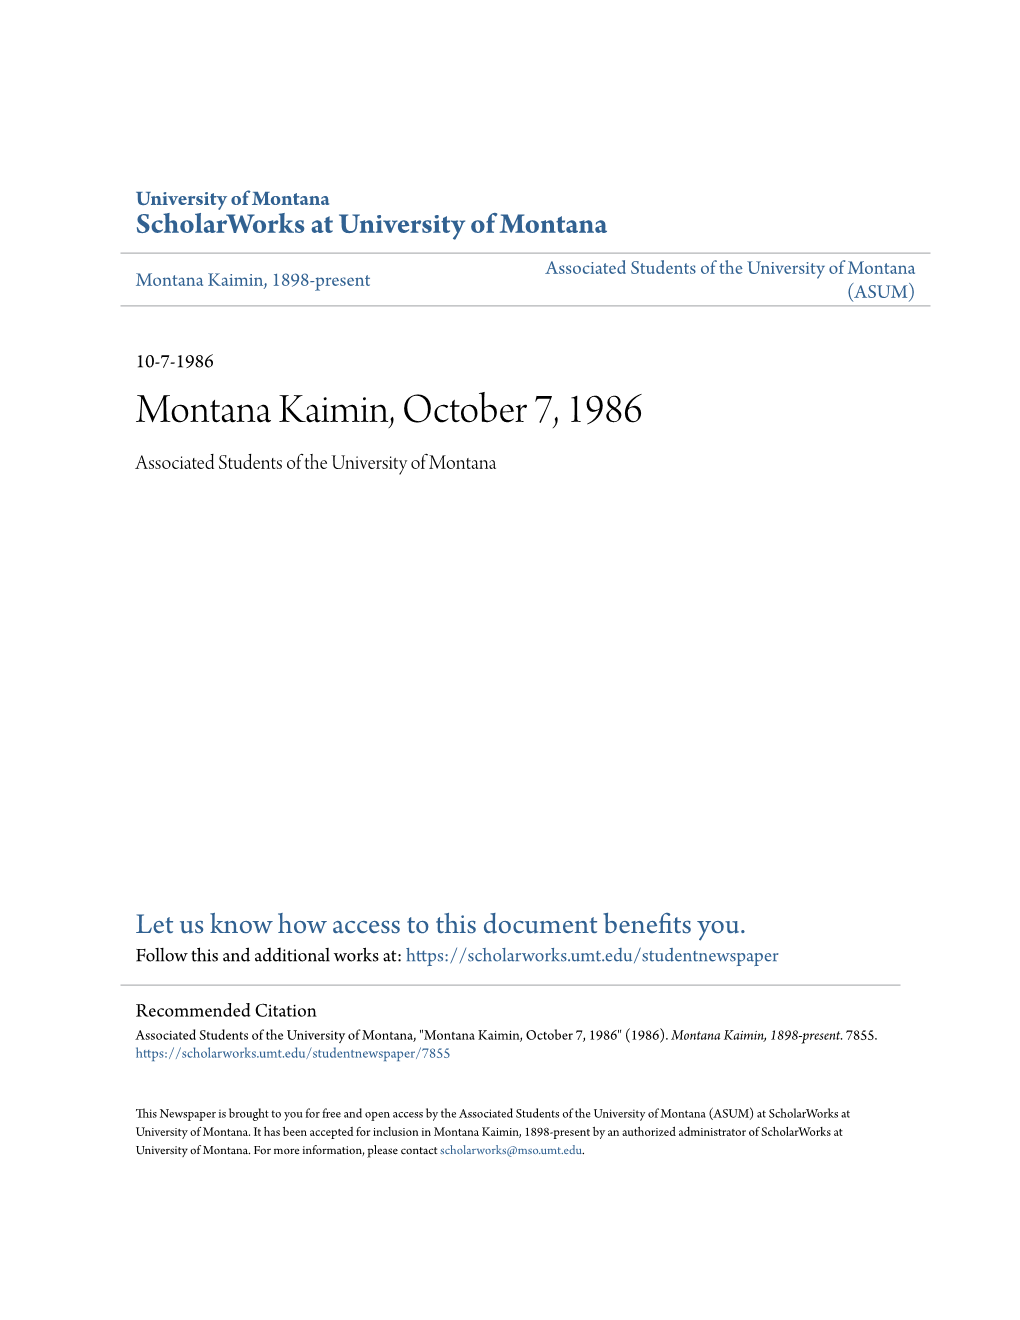 Montana Kaimin, October 7, 1986 Associated Students of the University of Montana